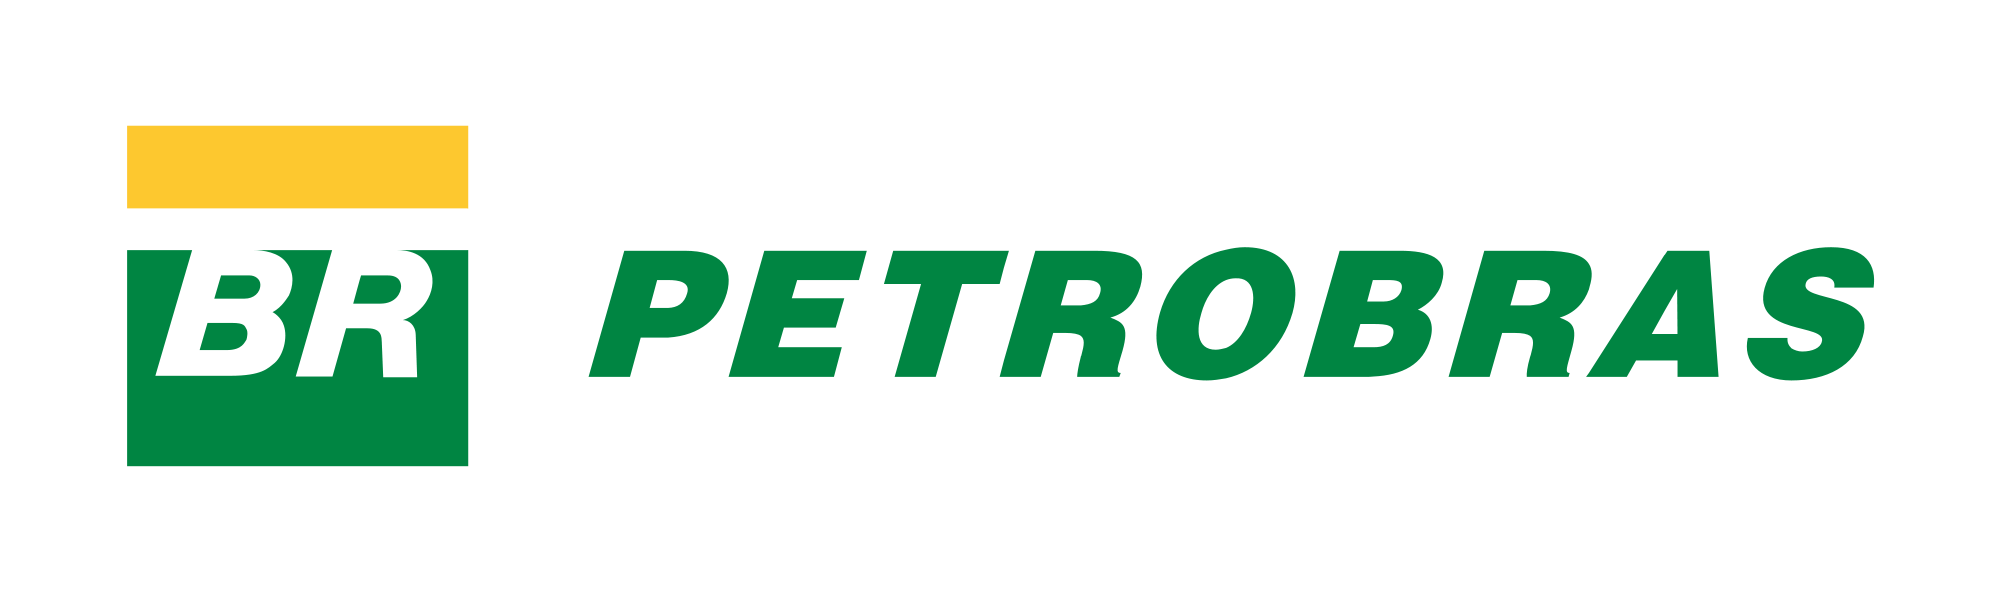 Petrobras Logo PNG - 30552